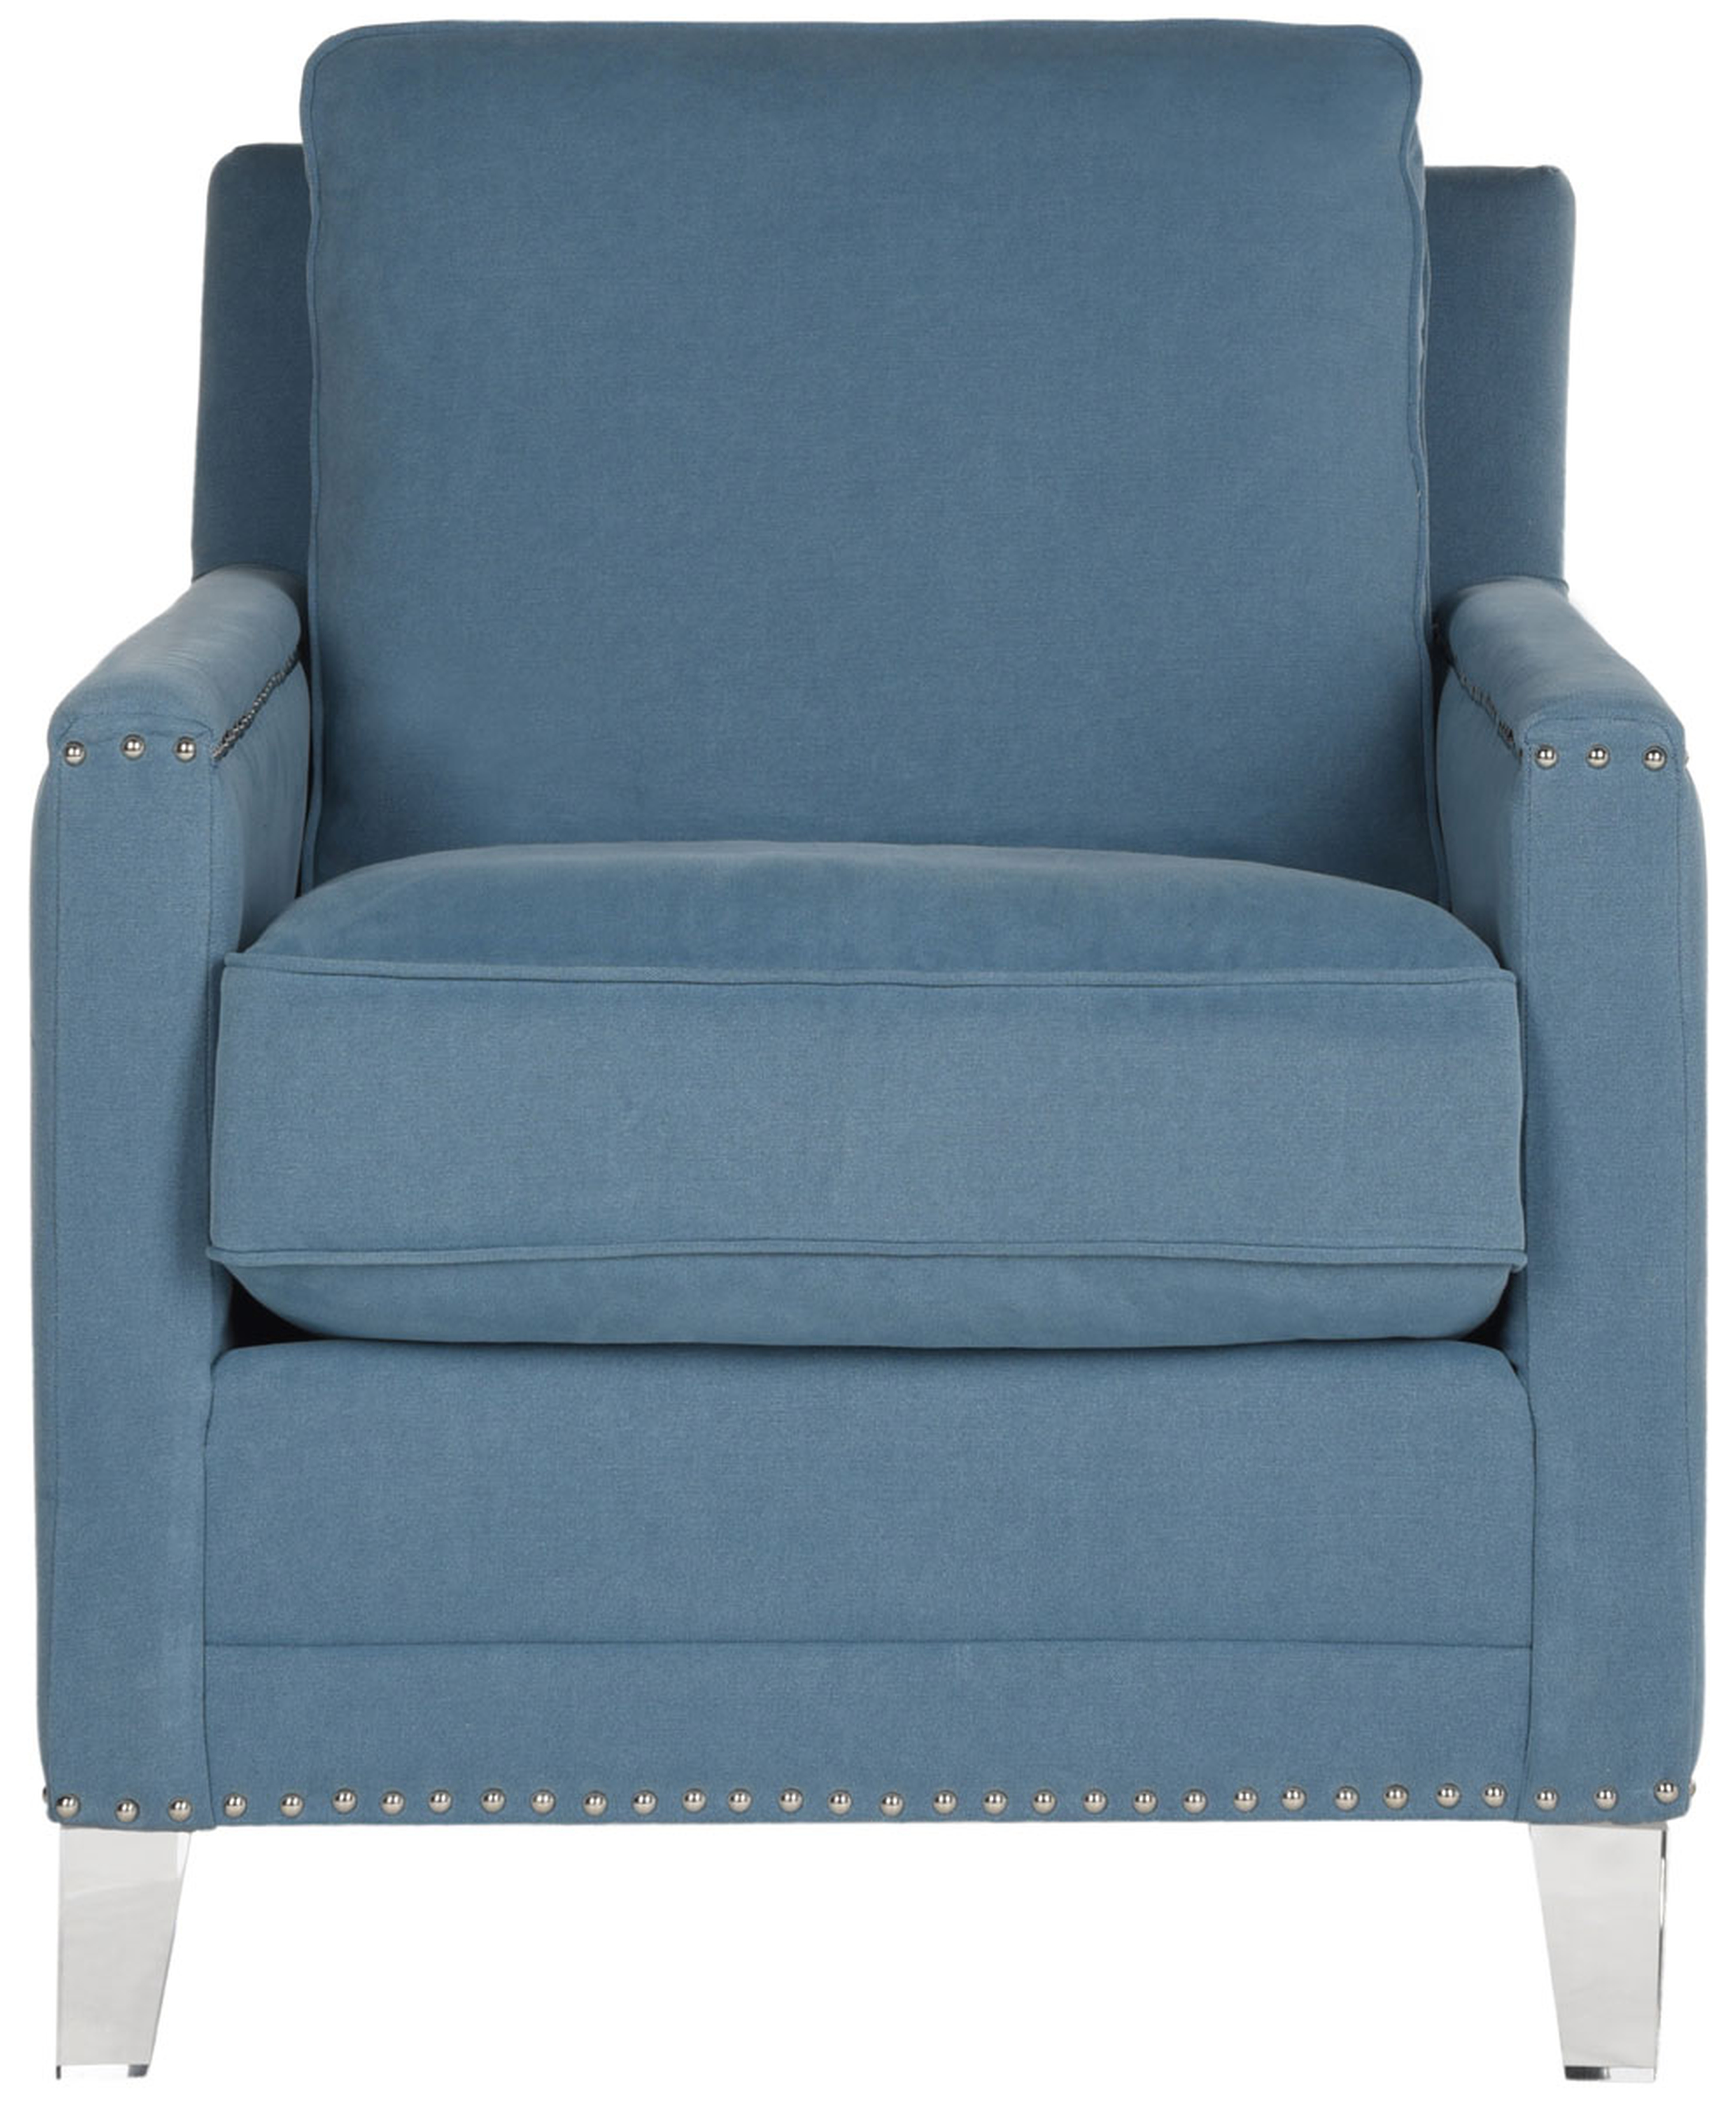 Hollywood Glam Acrylic Tufted Blue Club Chair W/ Silver Nail Heads - Blue/Clear - Safavieh - Arlo Home